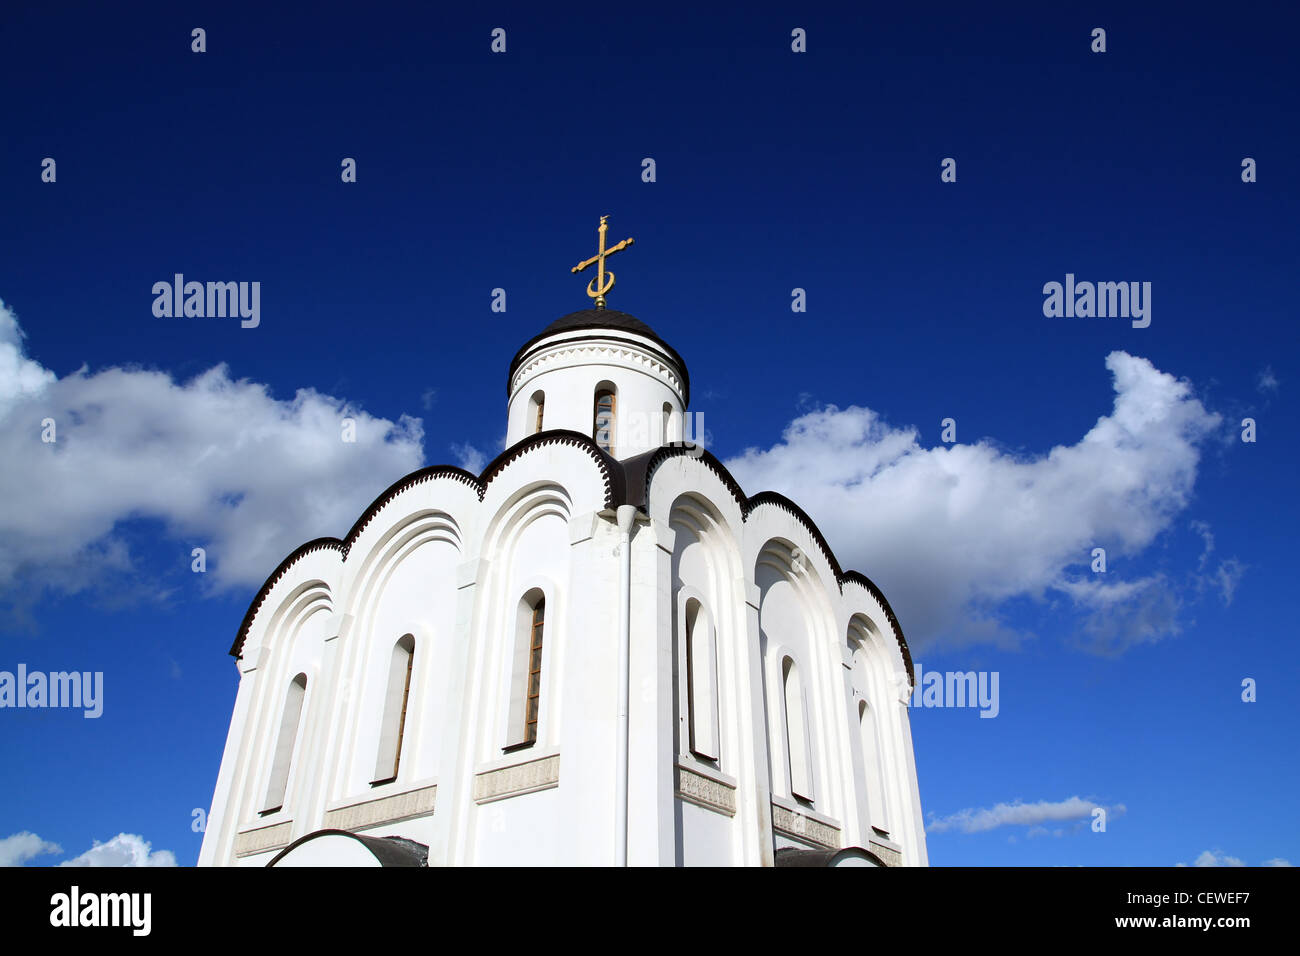 christian orthodox church on celestial background Stock Photo